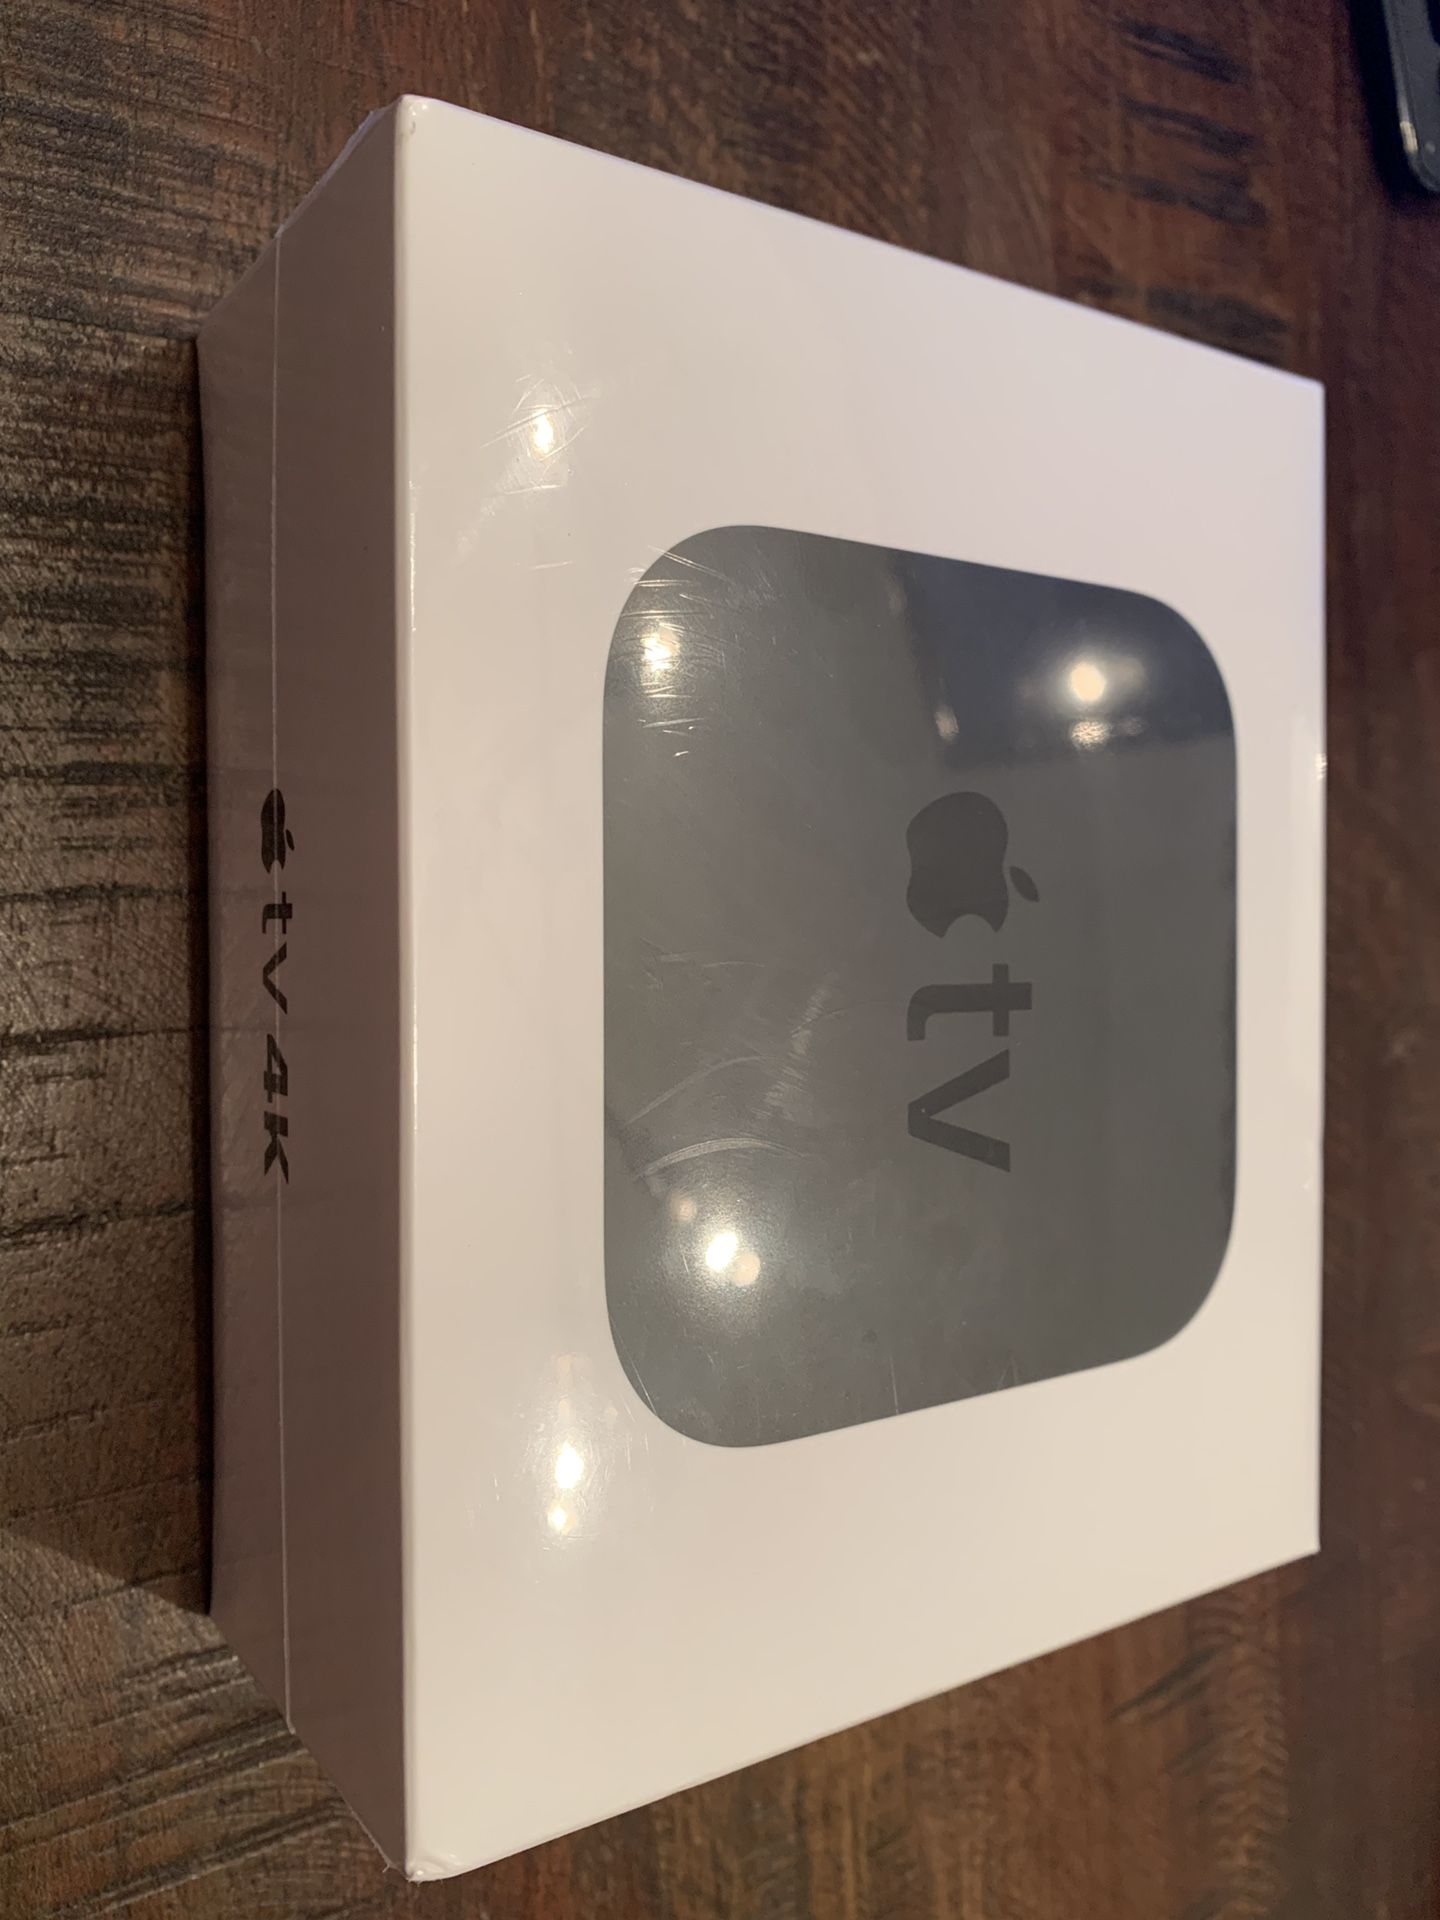 Apple TV 4K new in box never opened.